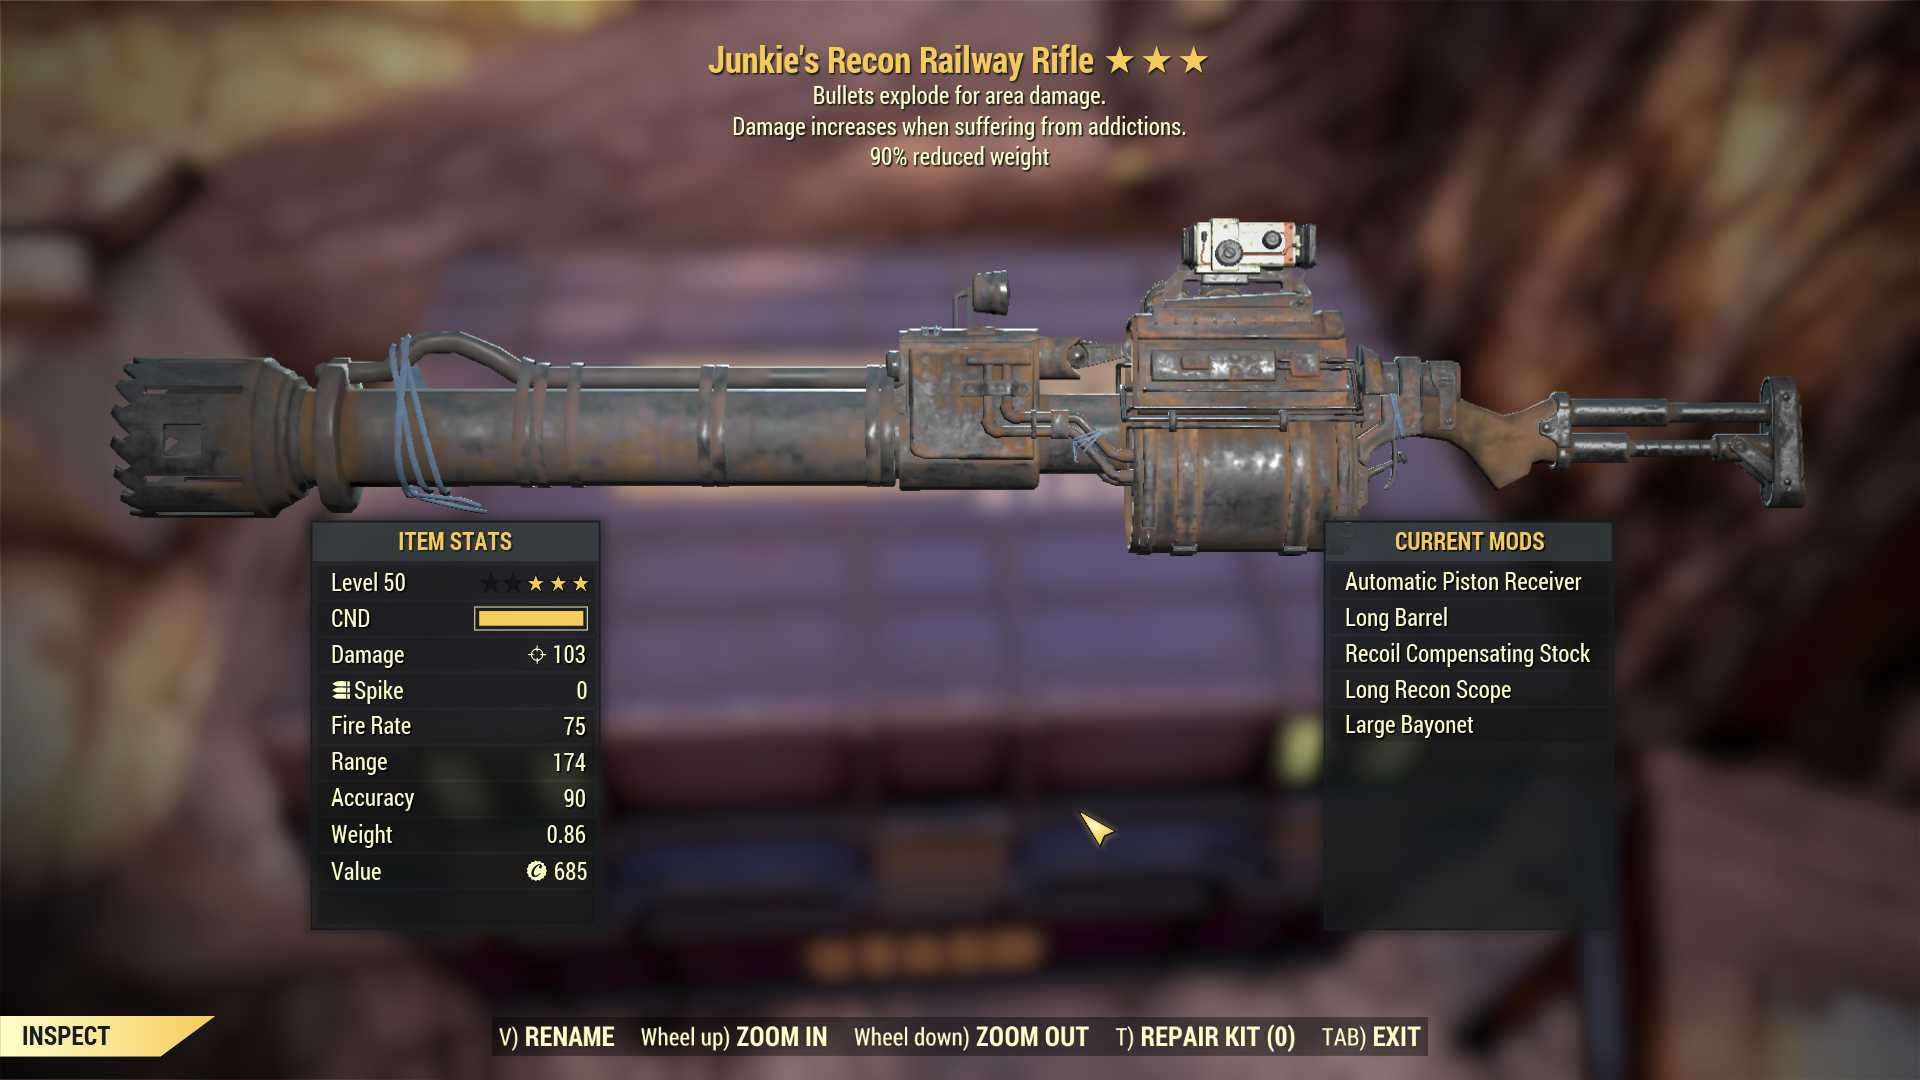 Junkie's Explosive Railway (90% reduced weight)